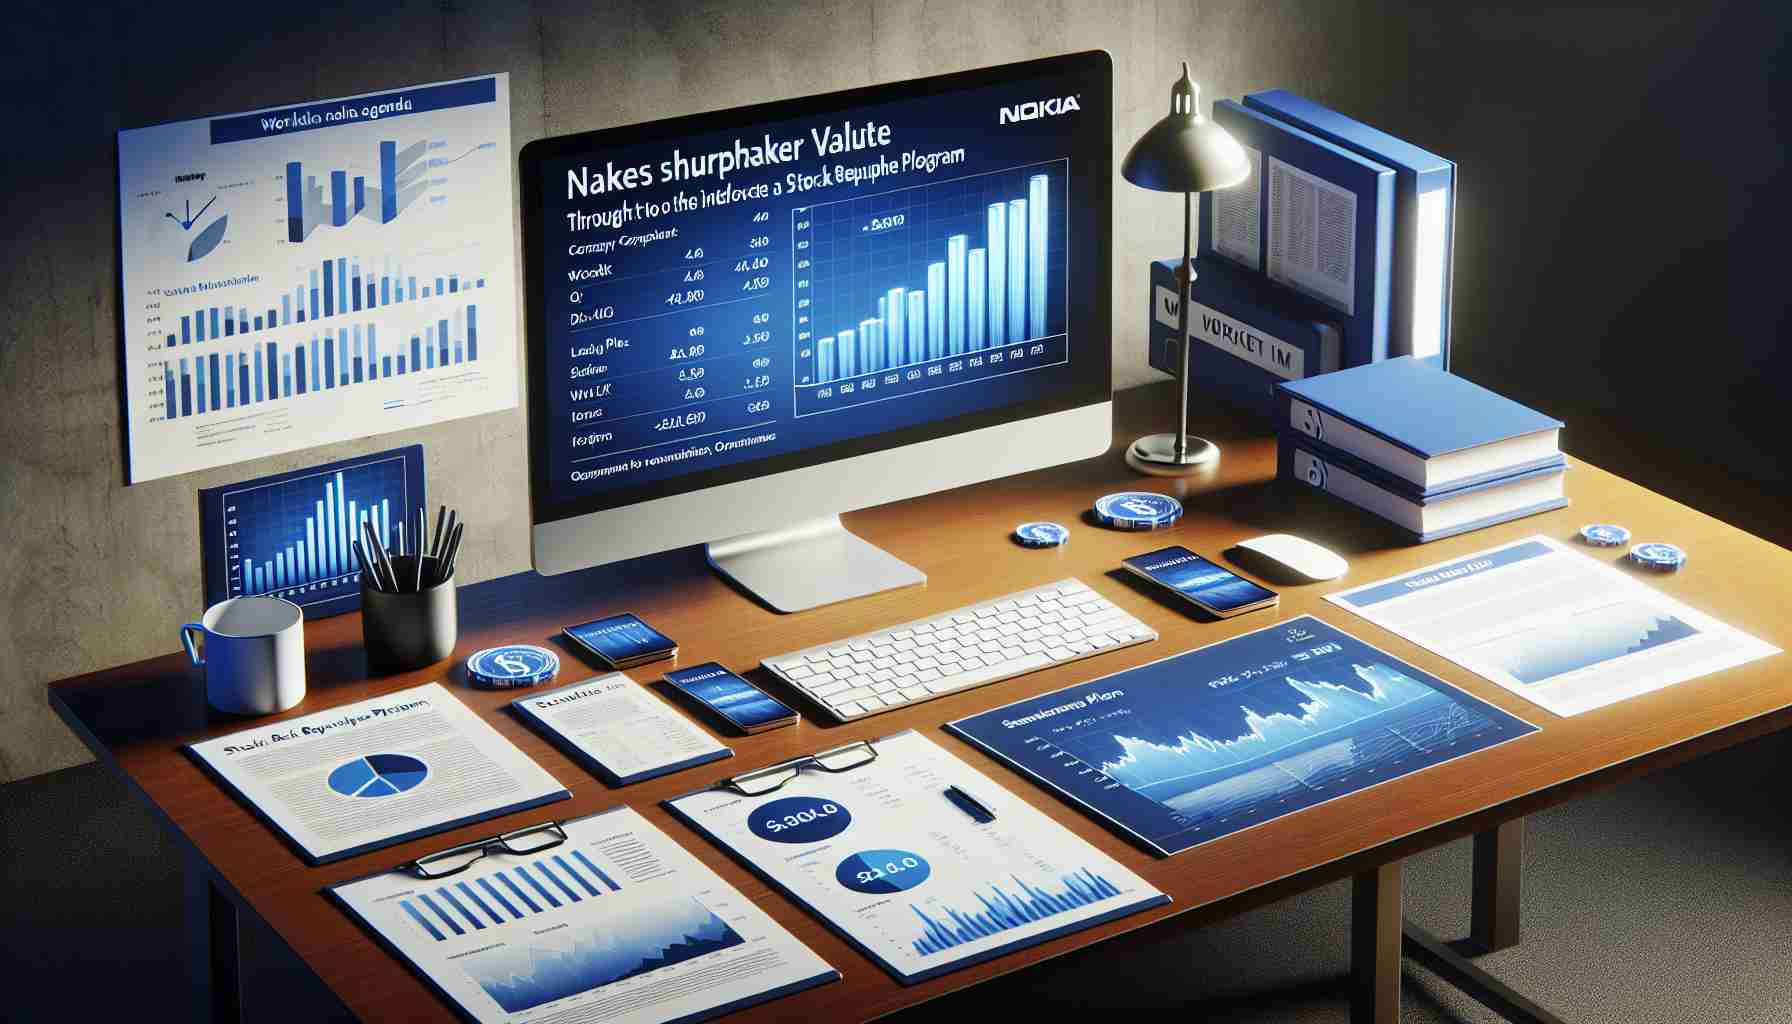 Nokia Advances Shareholder Value With Stock Repurchase Program